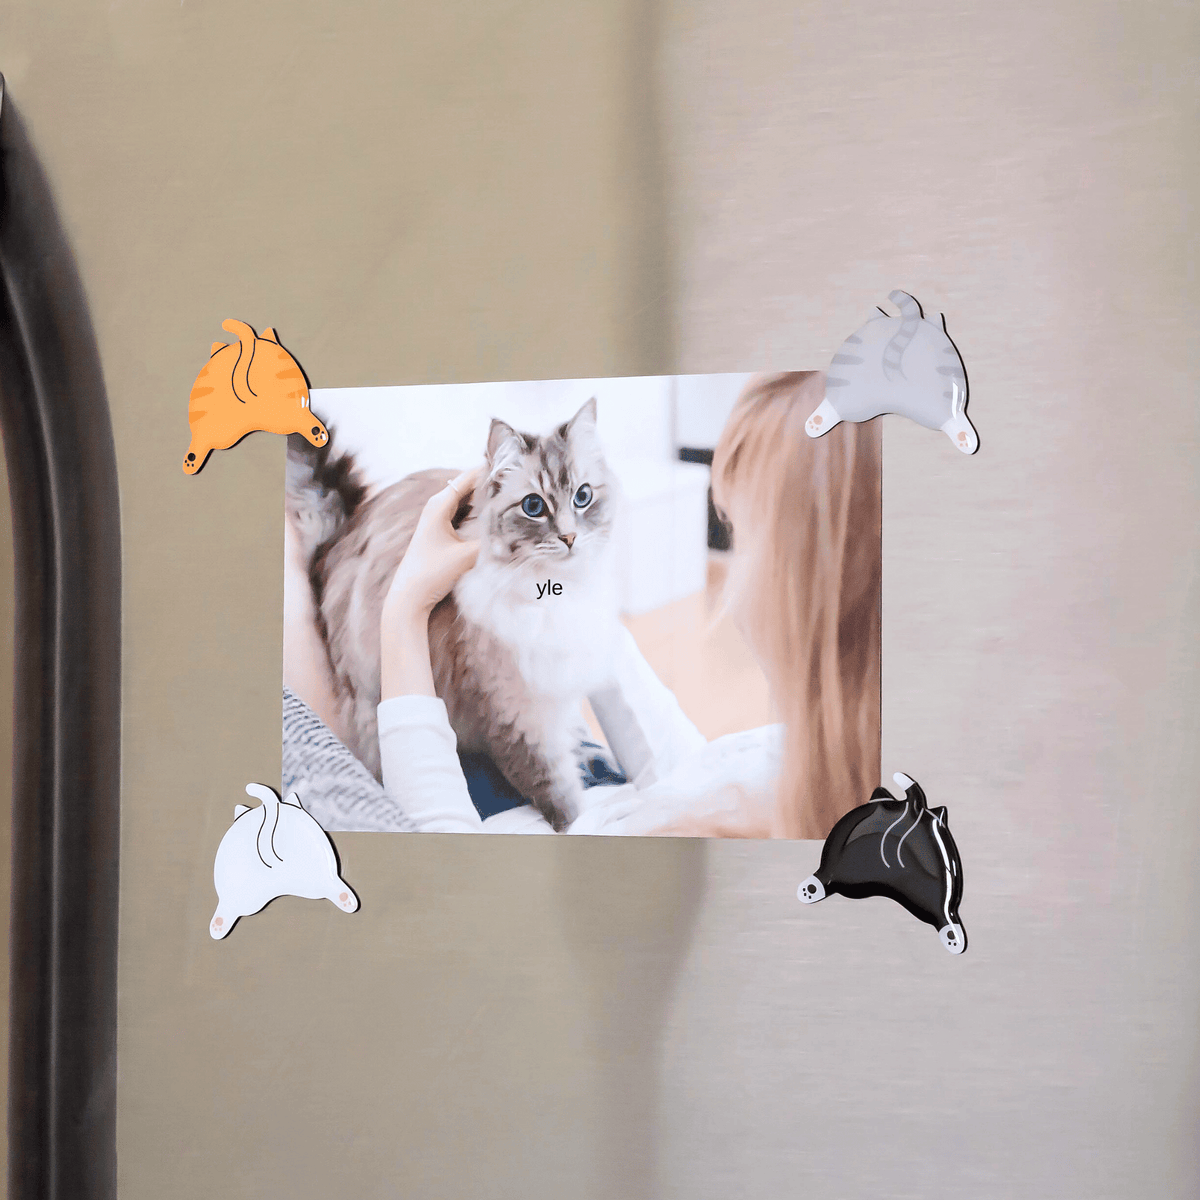 Novelty Cat Butt Magnets for home decor